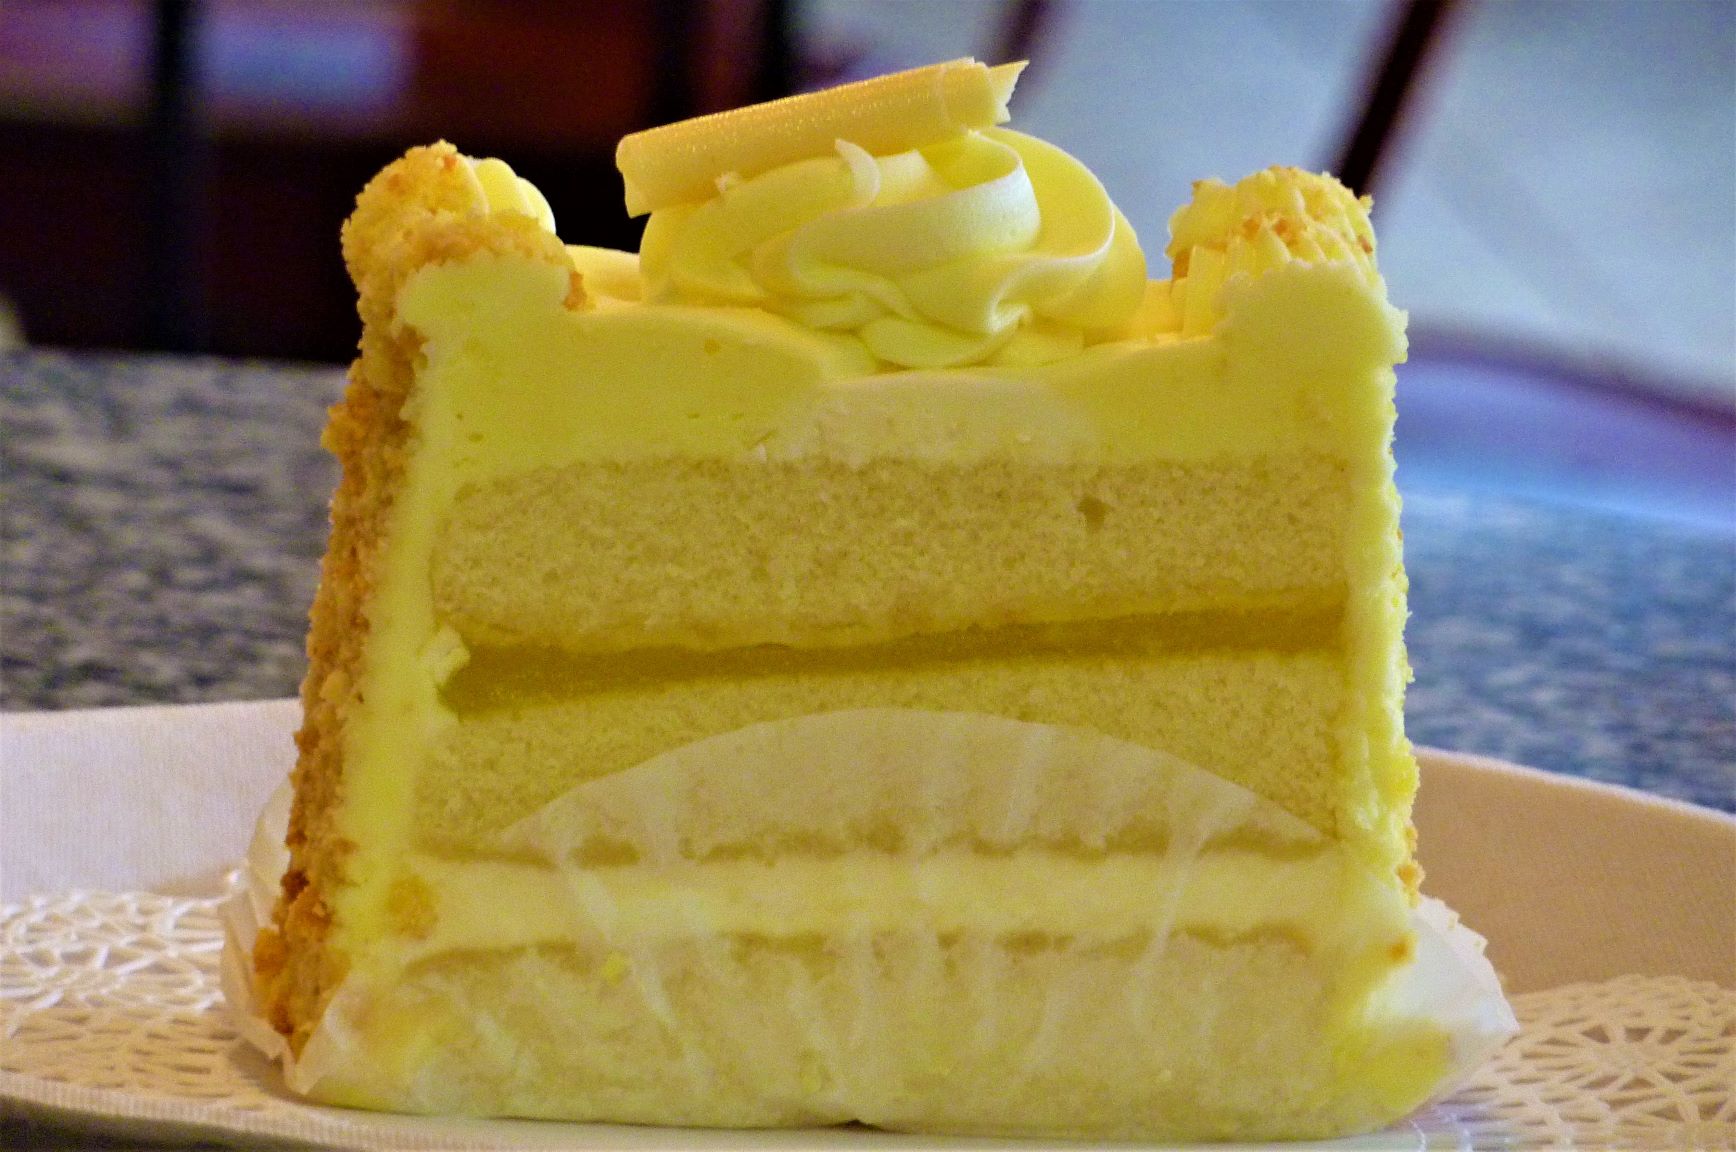 Montilio's lemon cake from CRISPWalpole in Walpole, MA